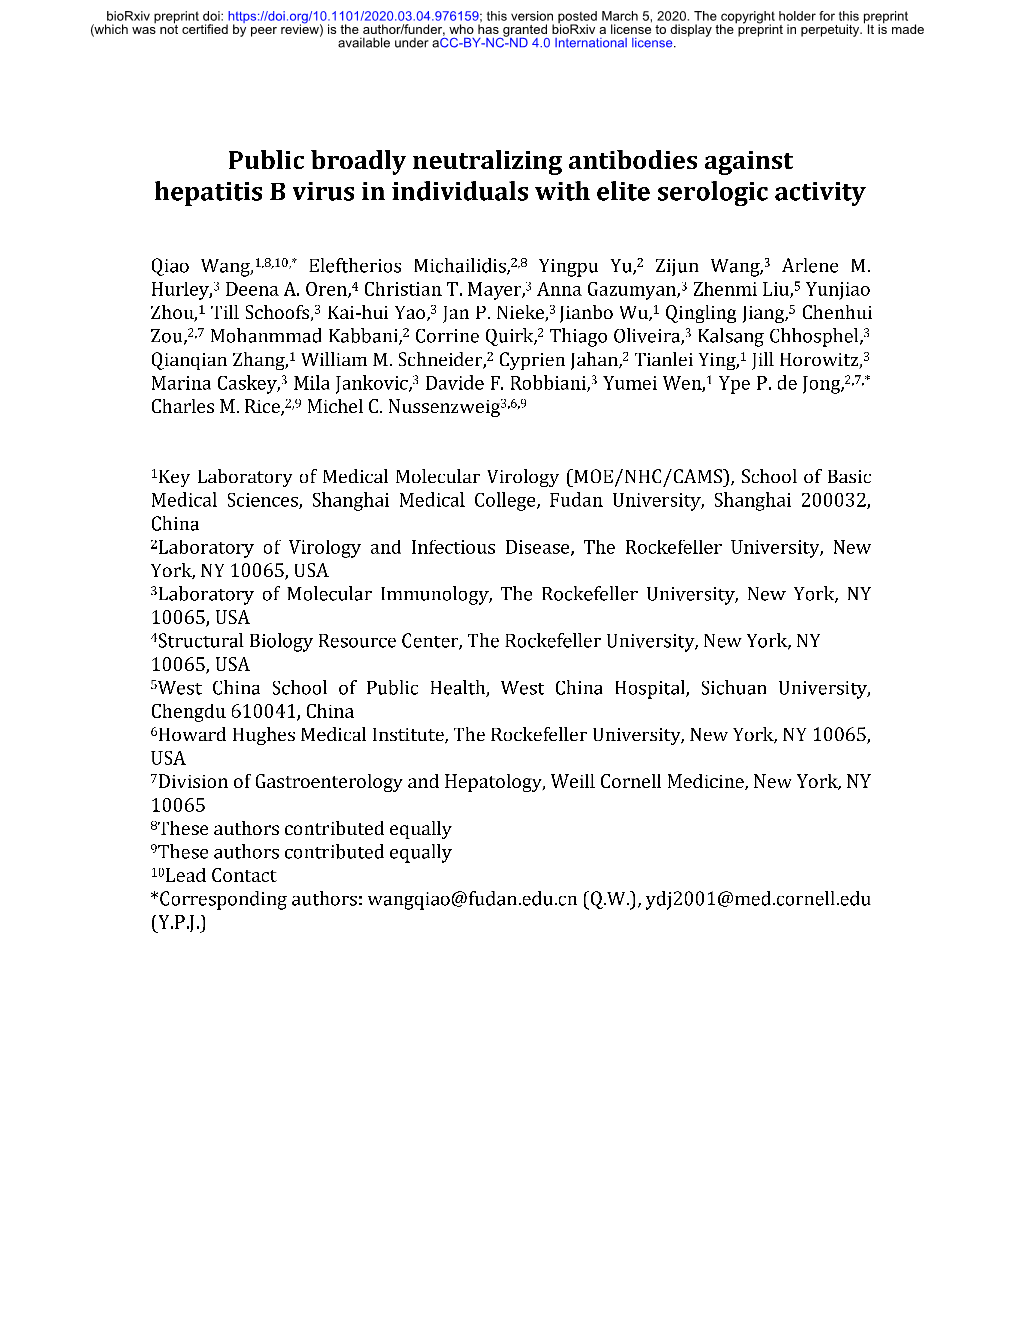 Public Broadly Neutralizing Antibodies Against Hepatitis B Virus in Individuals with Elite Serologic Activity